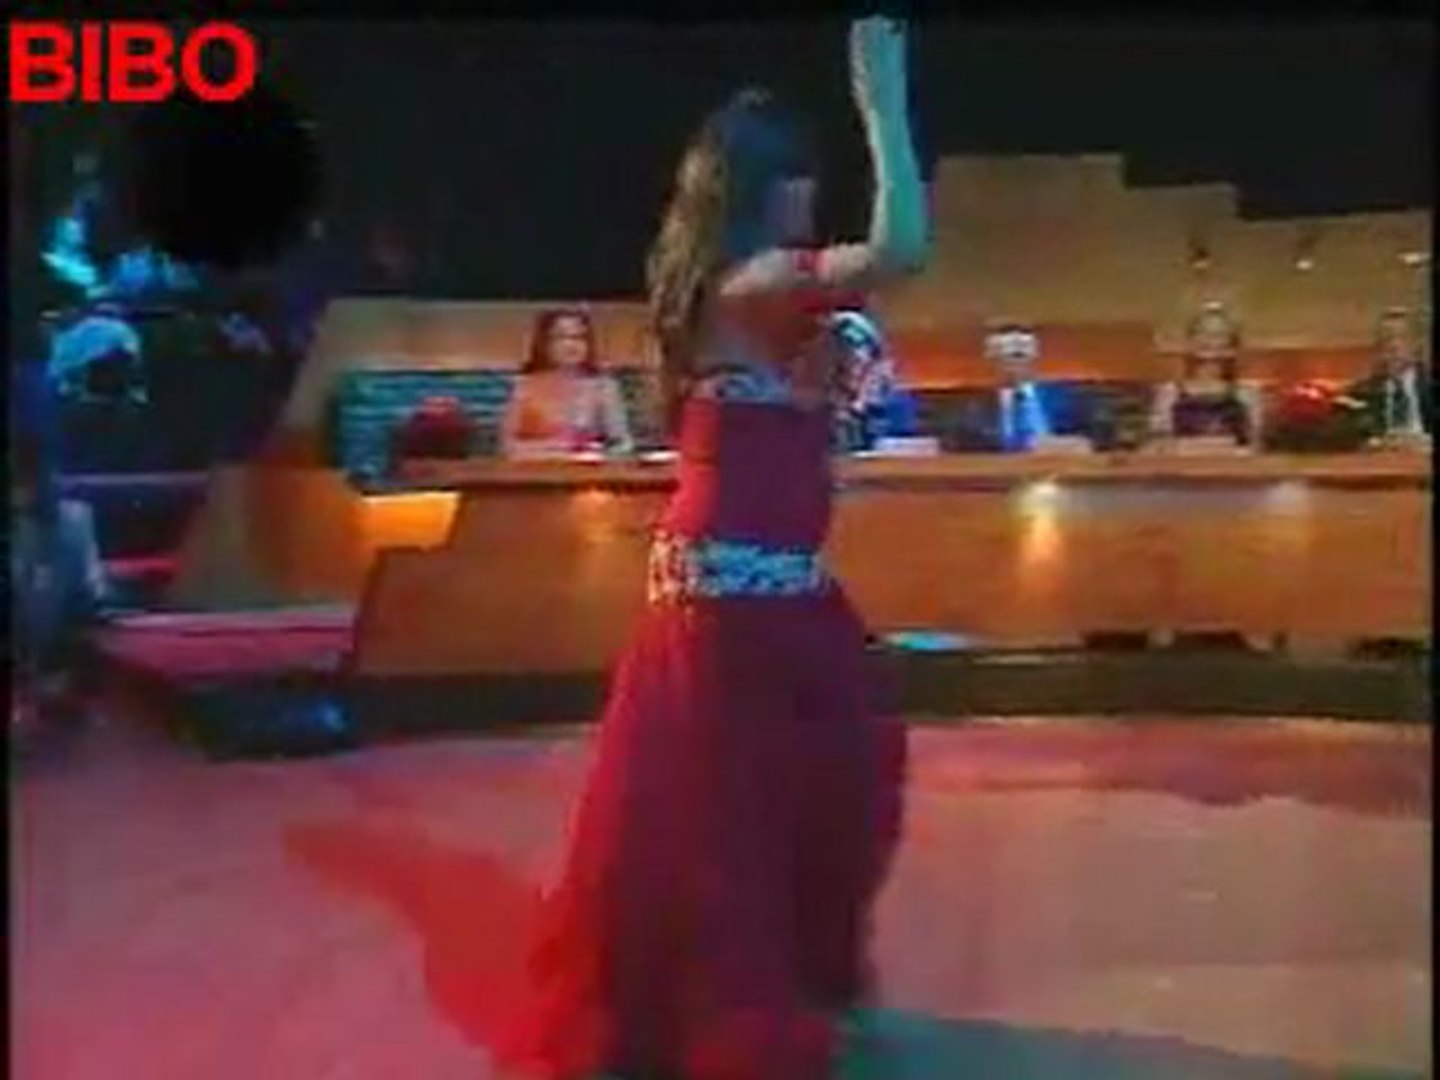 billy dance fefe رقص شرقي فيفي by BIBO - video Dailymotion